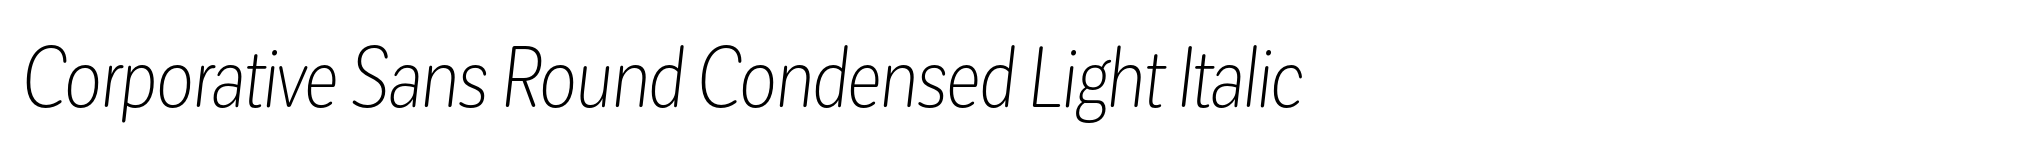 Corporative Sans Round Condensed Light Italic image